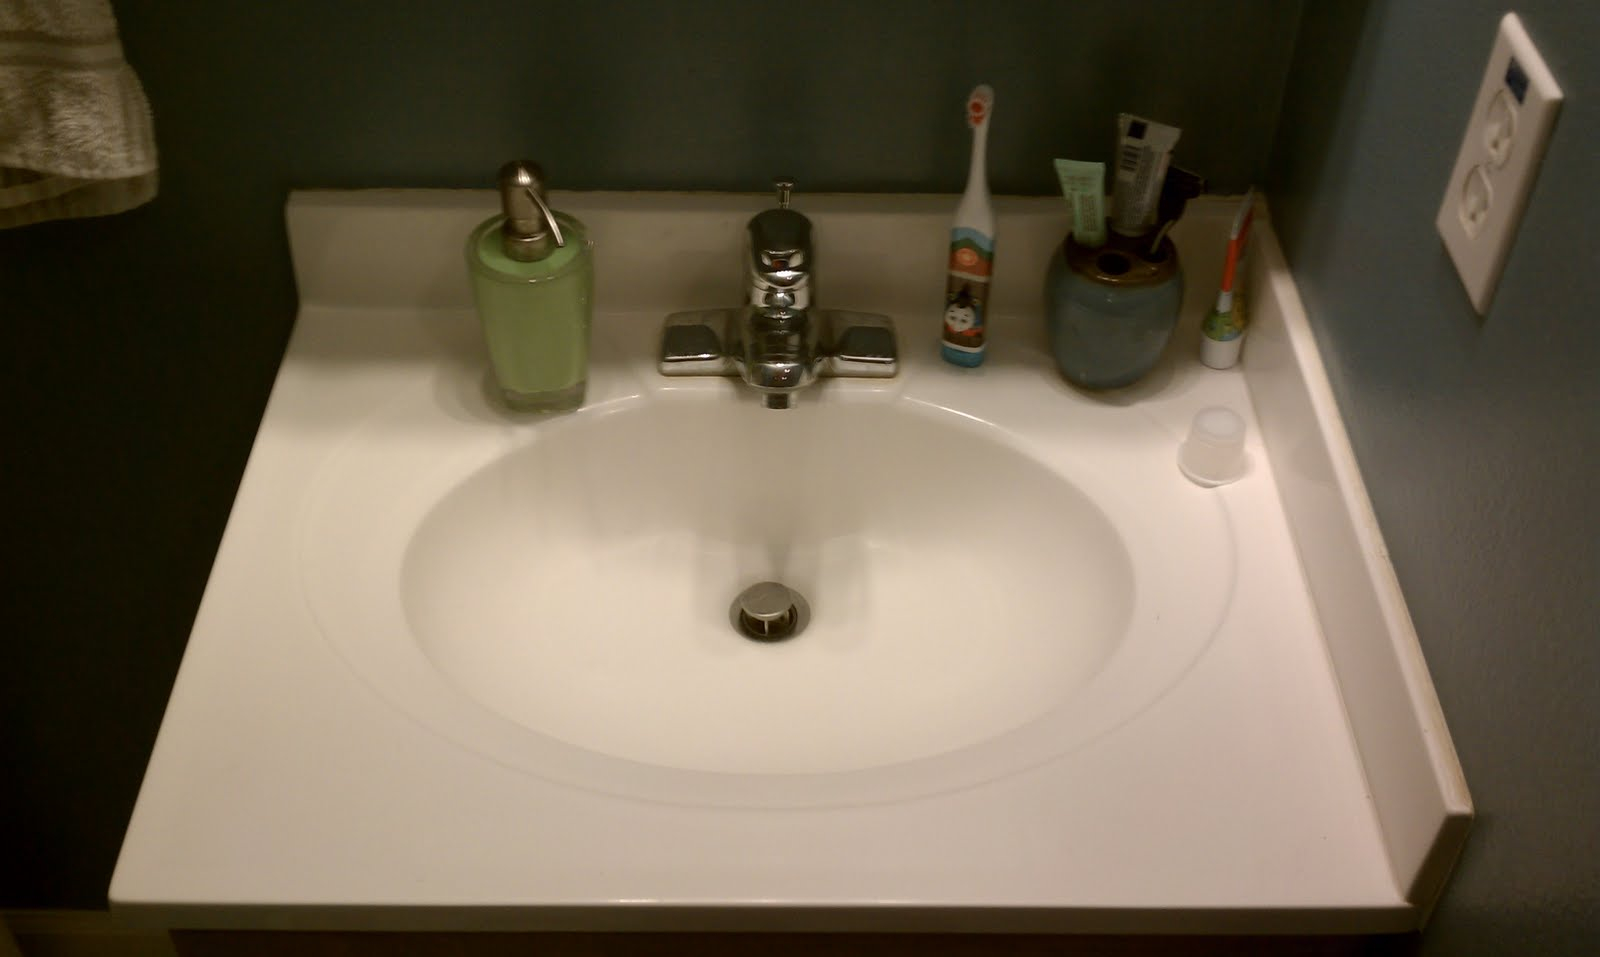 child proof kitchen sink faucet